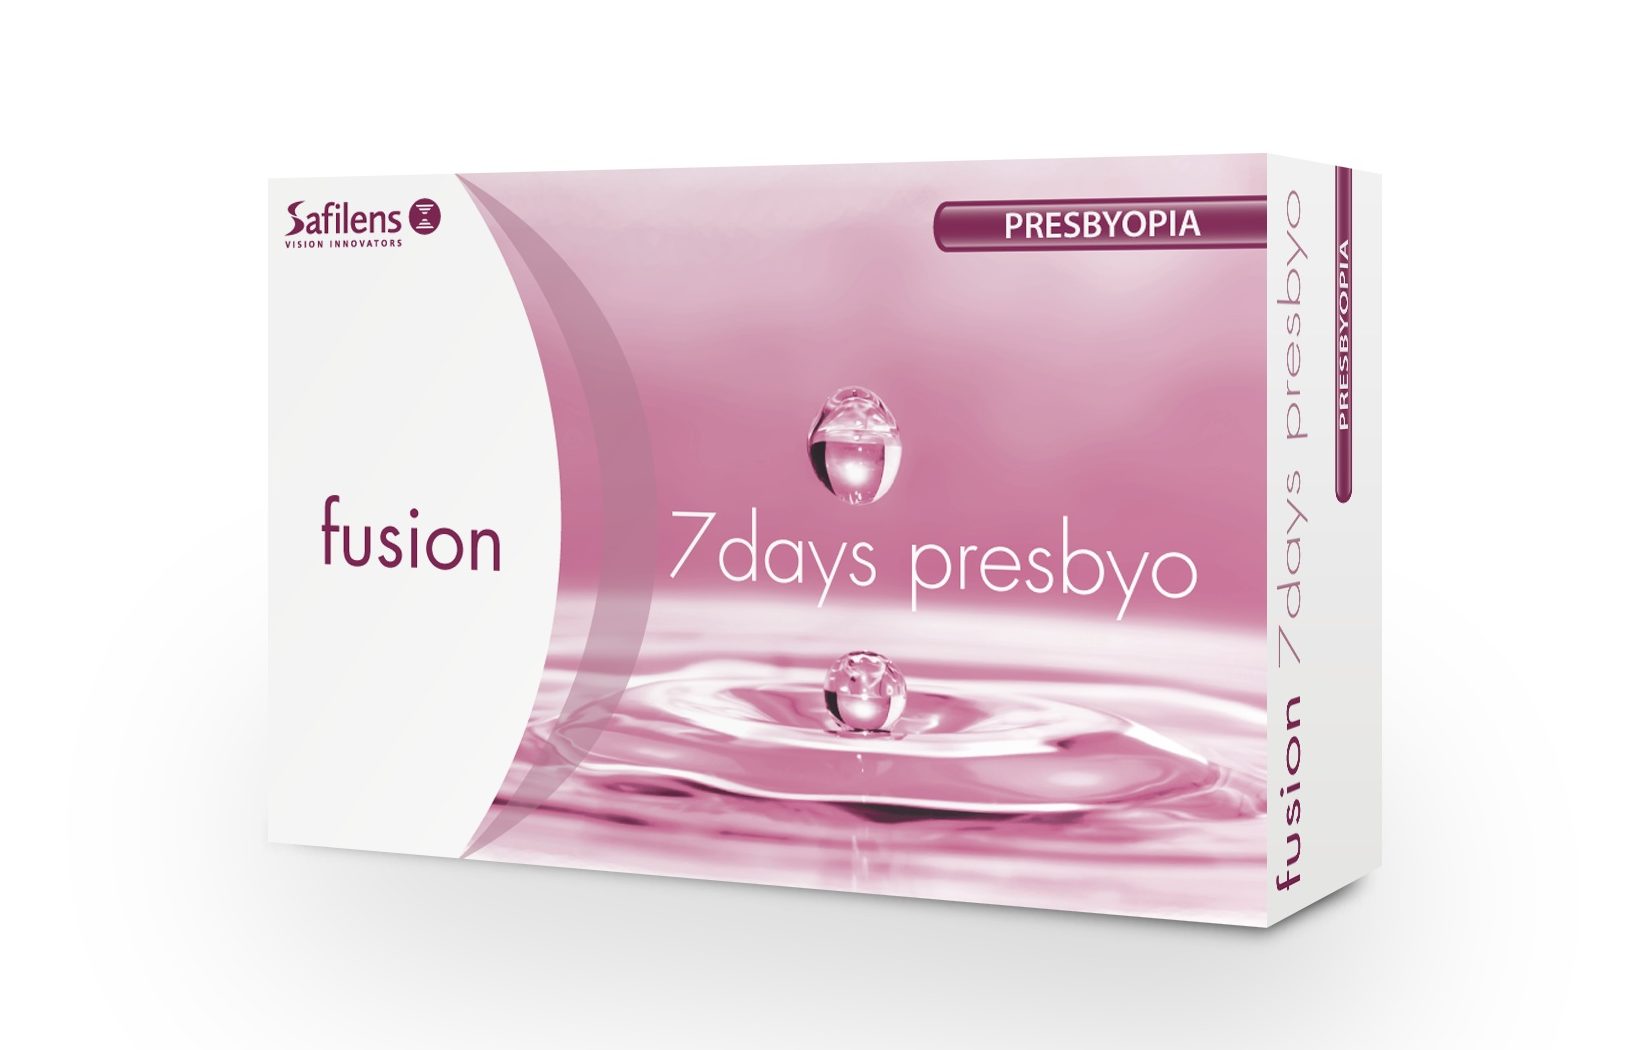 fusion 7days presbyo